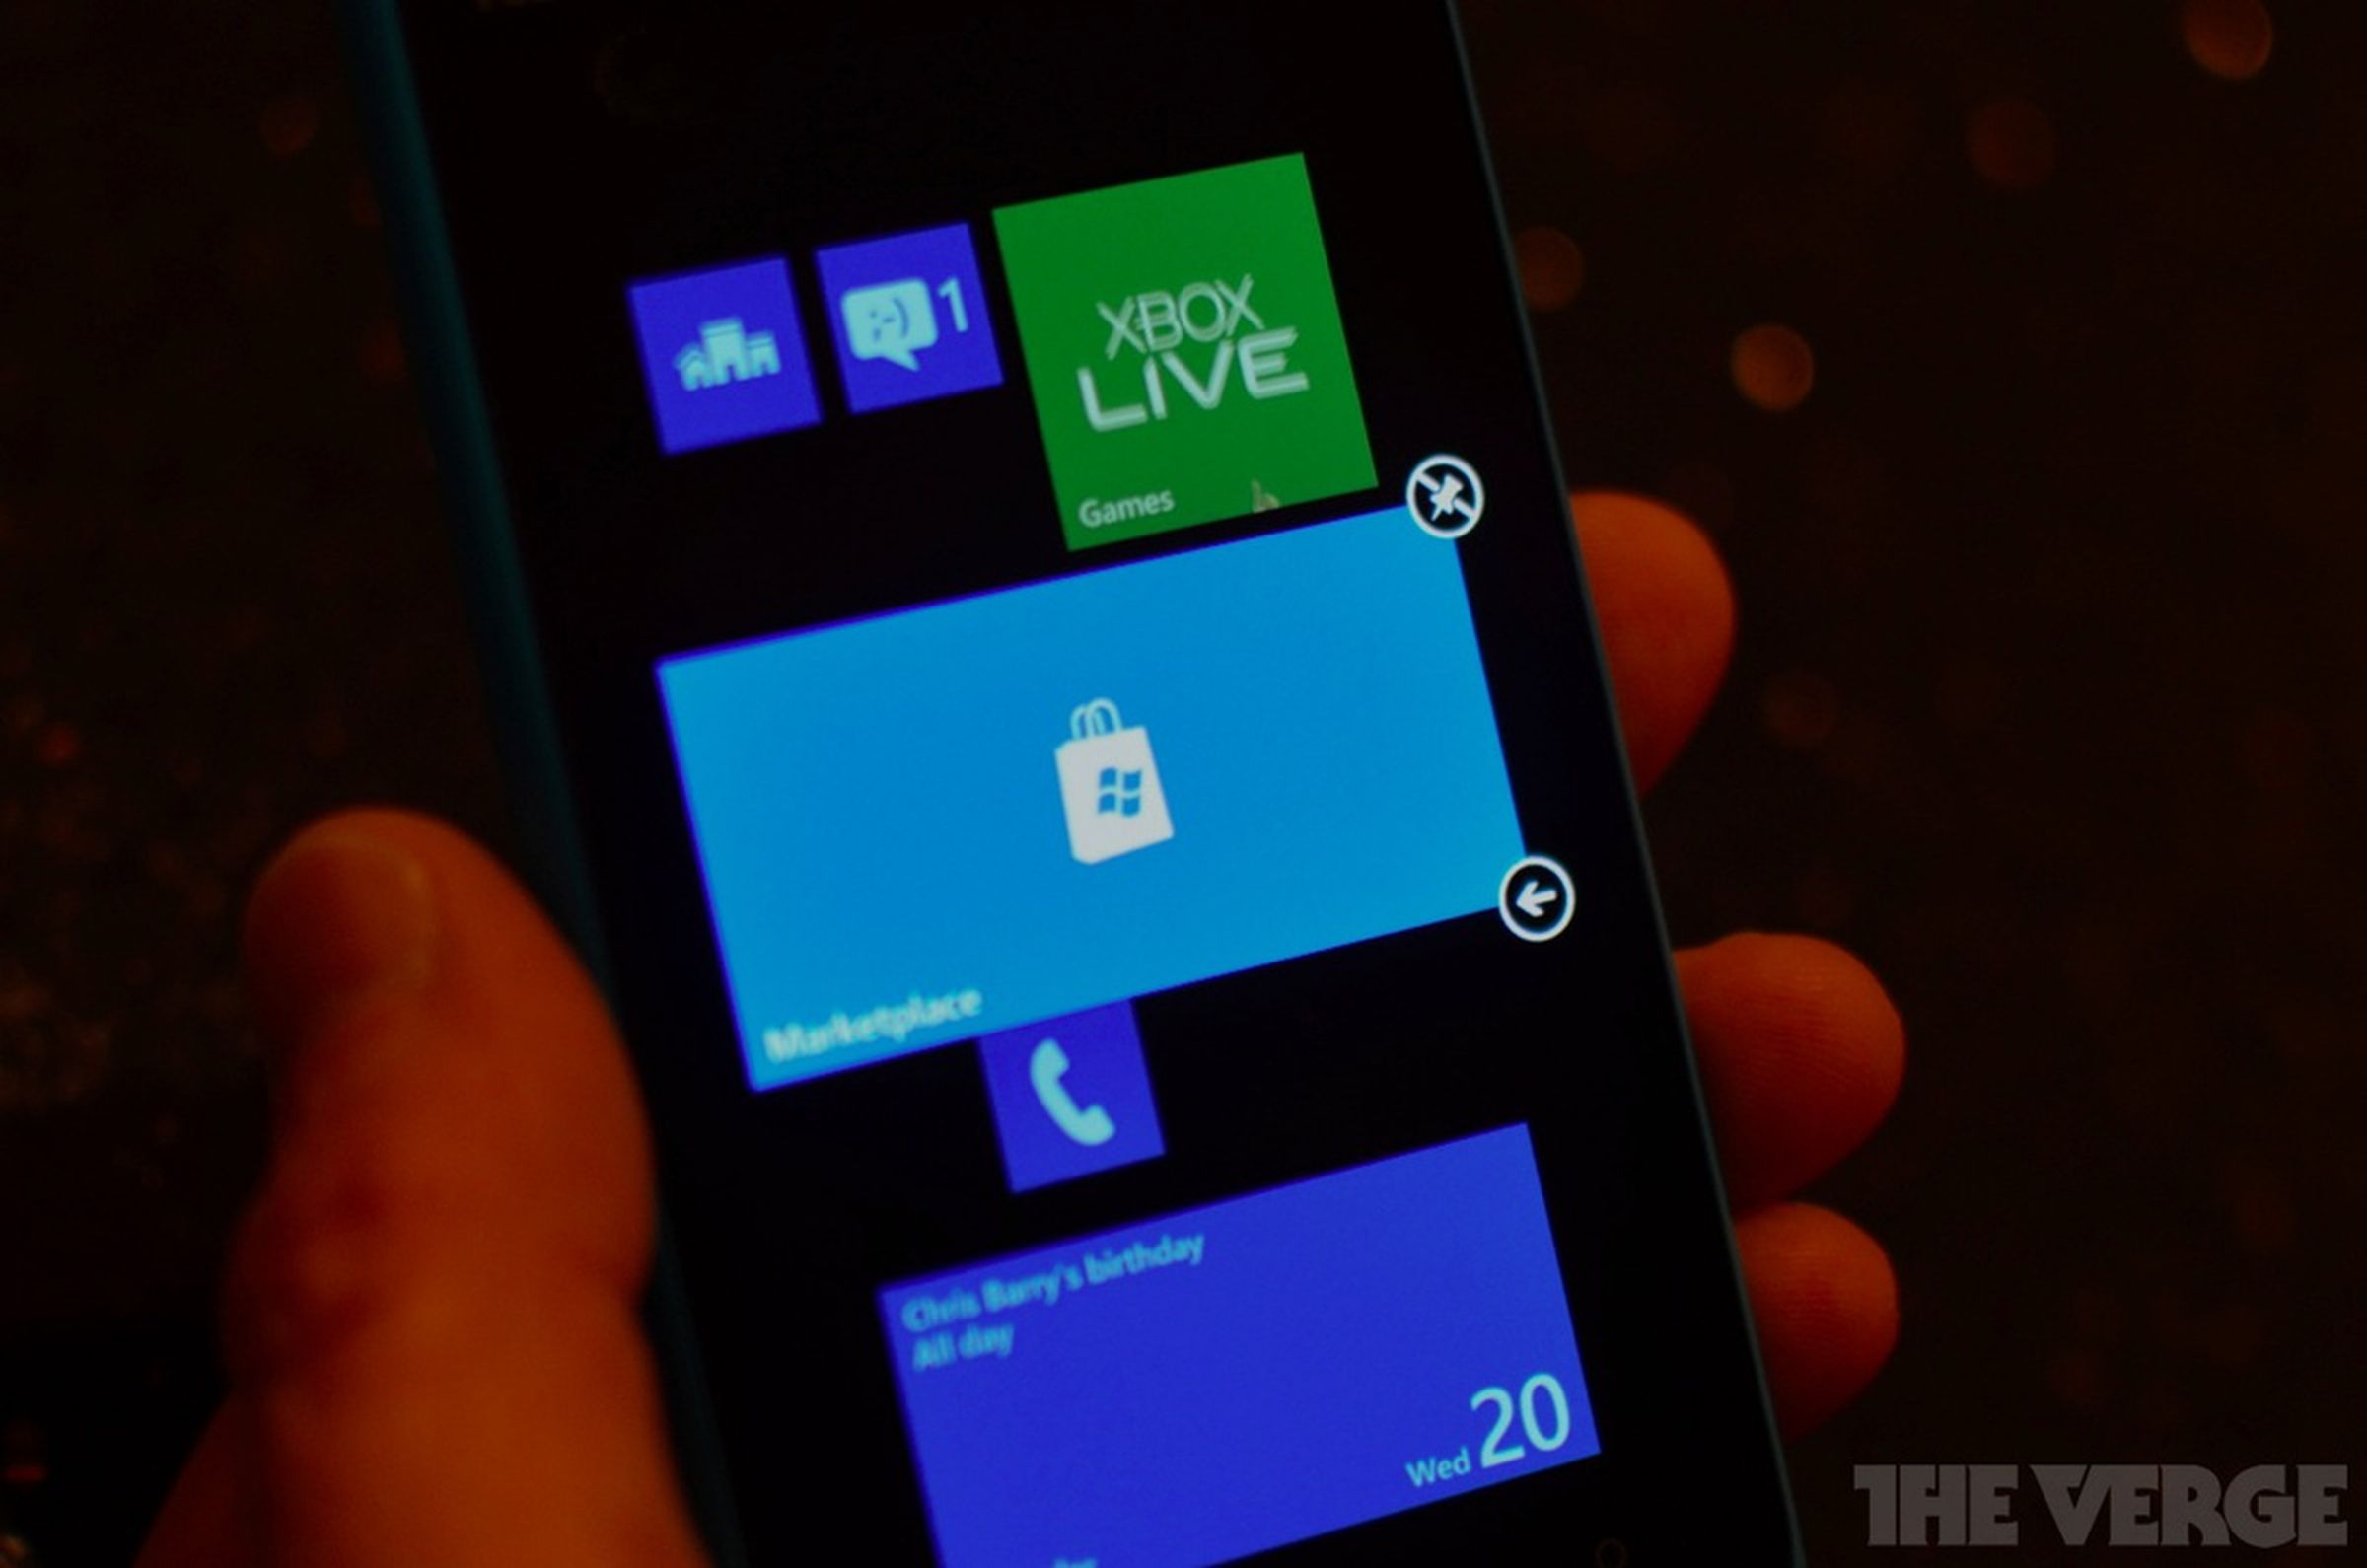 Nokia Lumia 900 with Windows Phone 7.8 Start Screen